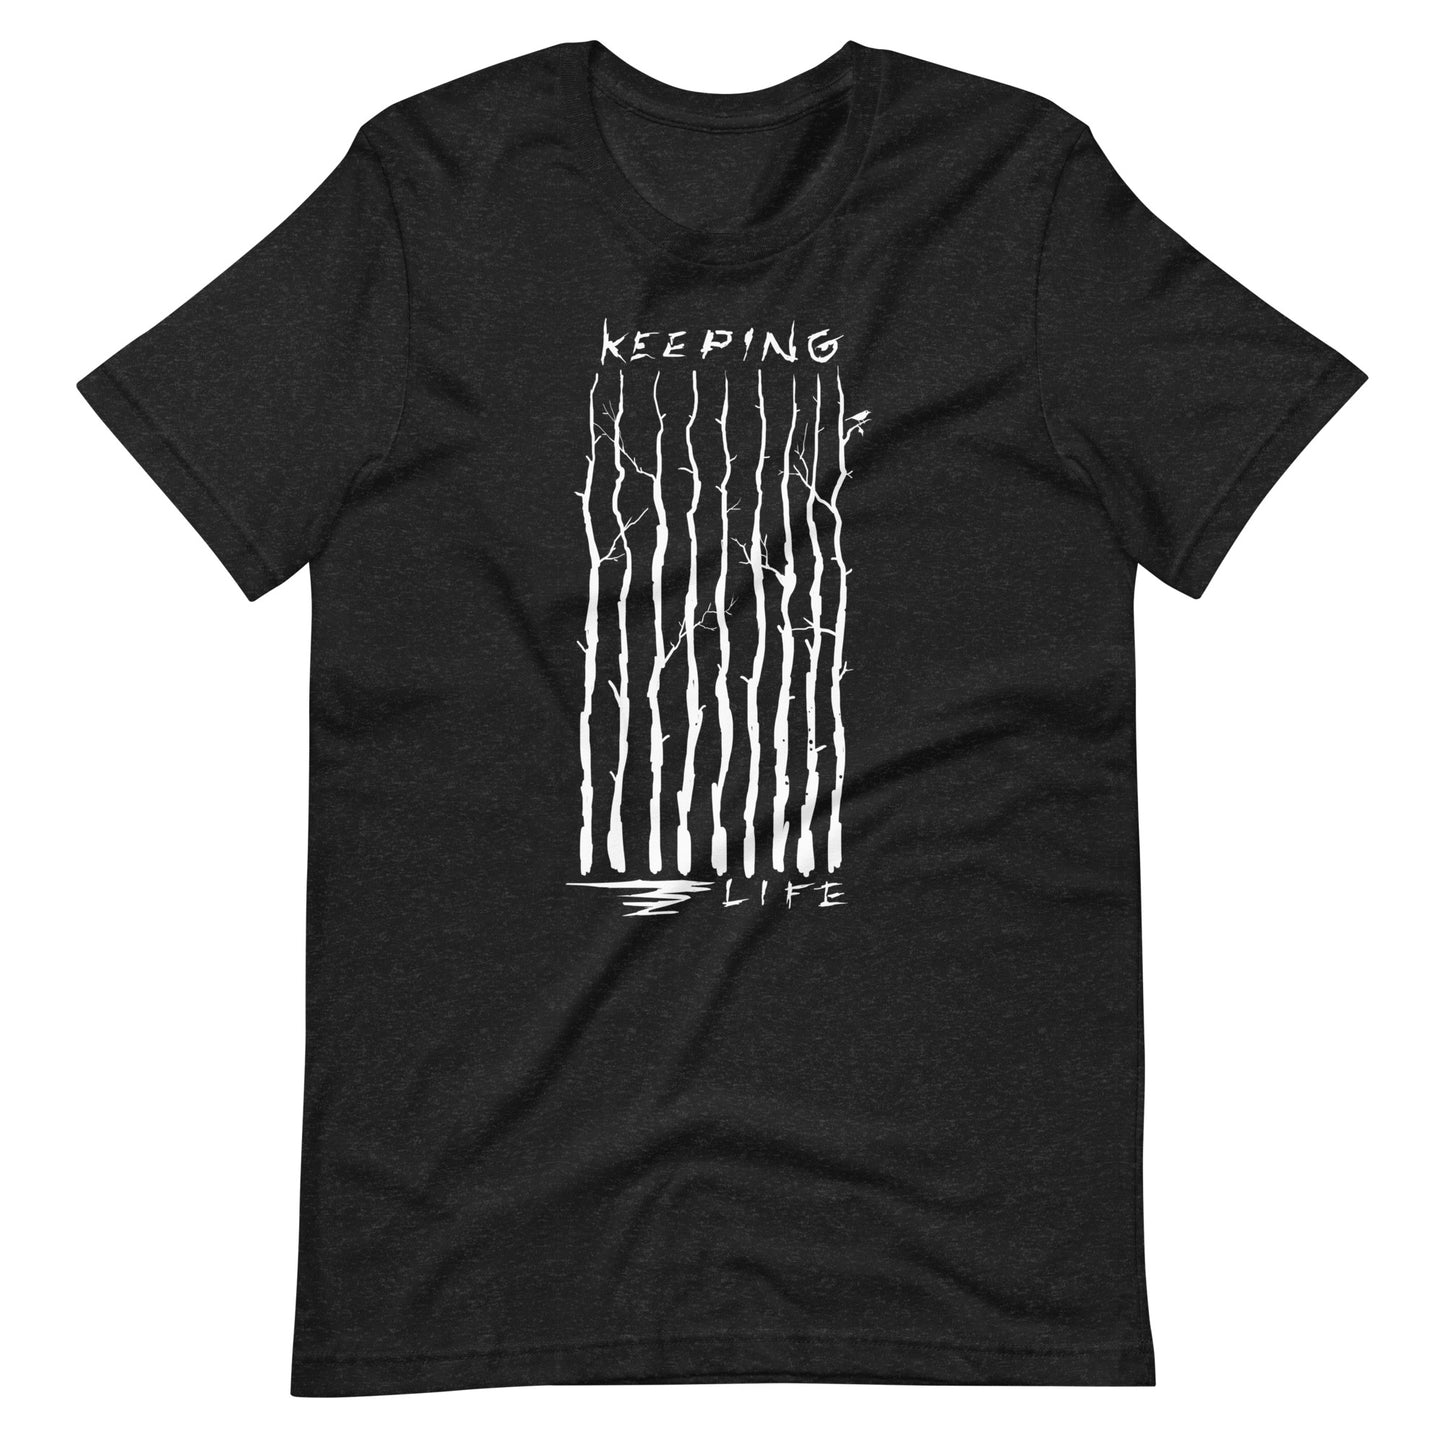 Keeping Lift - Men's t-shirt - Black Heather Front